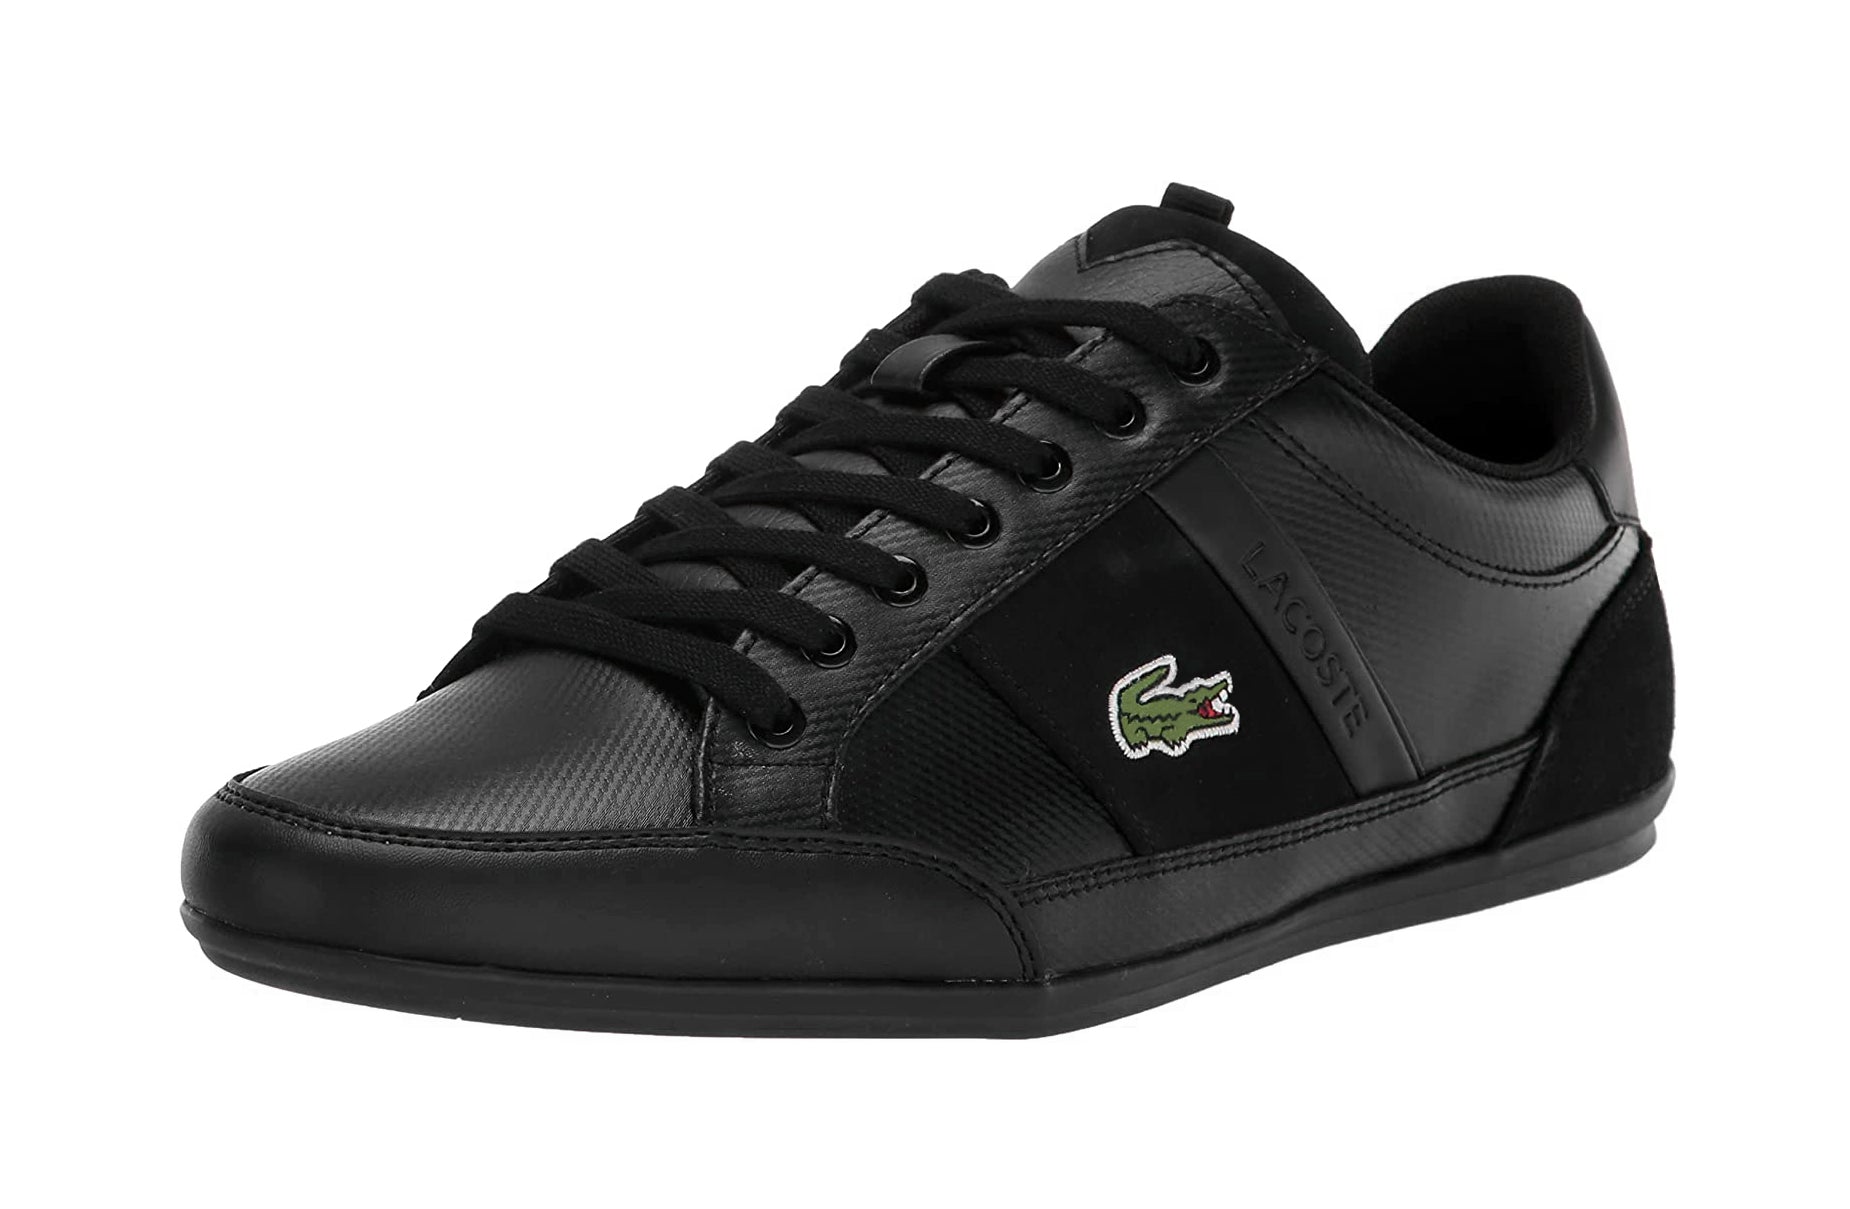 Hoe Afstudeeralbum zeemijl Lacoste Men's Chaymon Leather Black Shoes – Shoe Hut Online